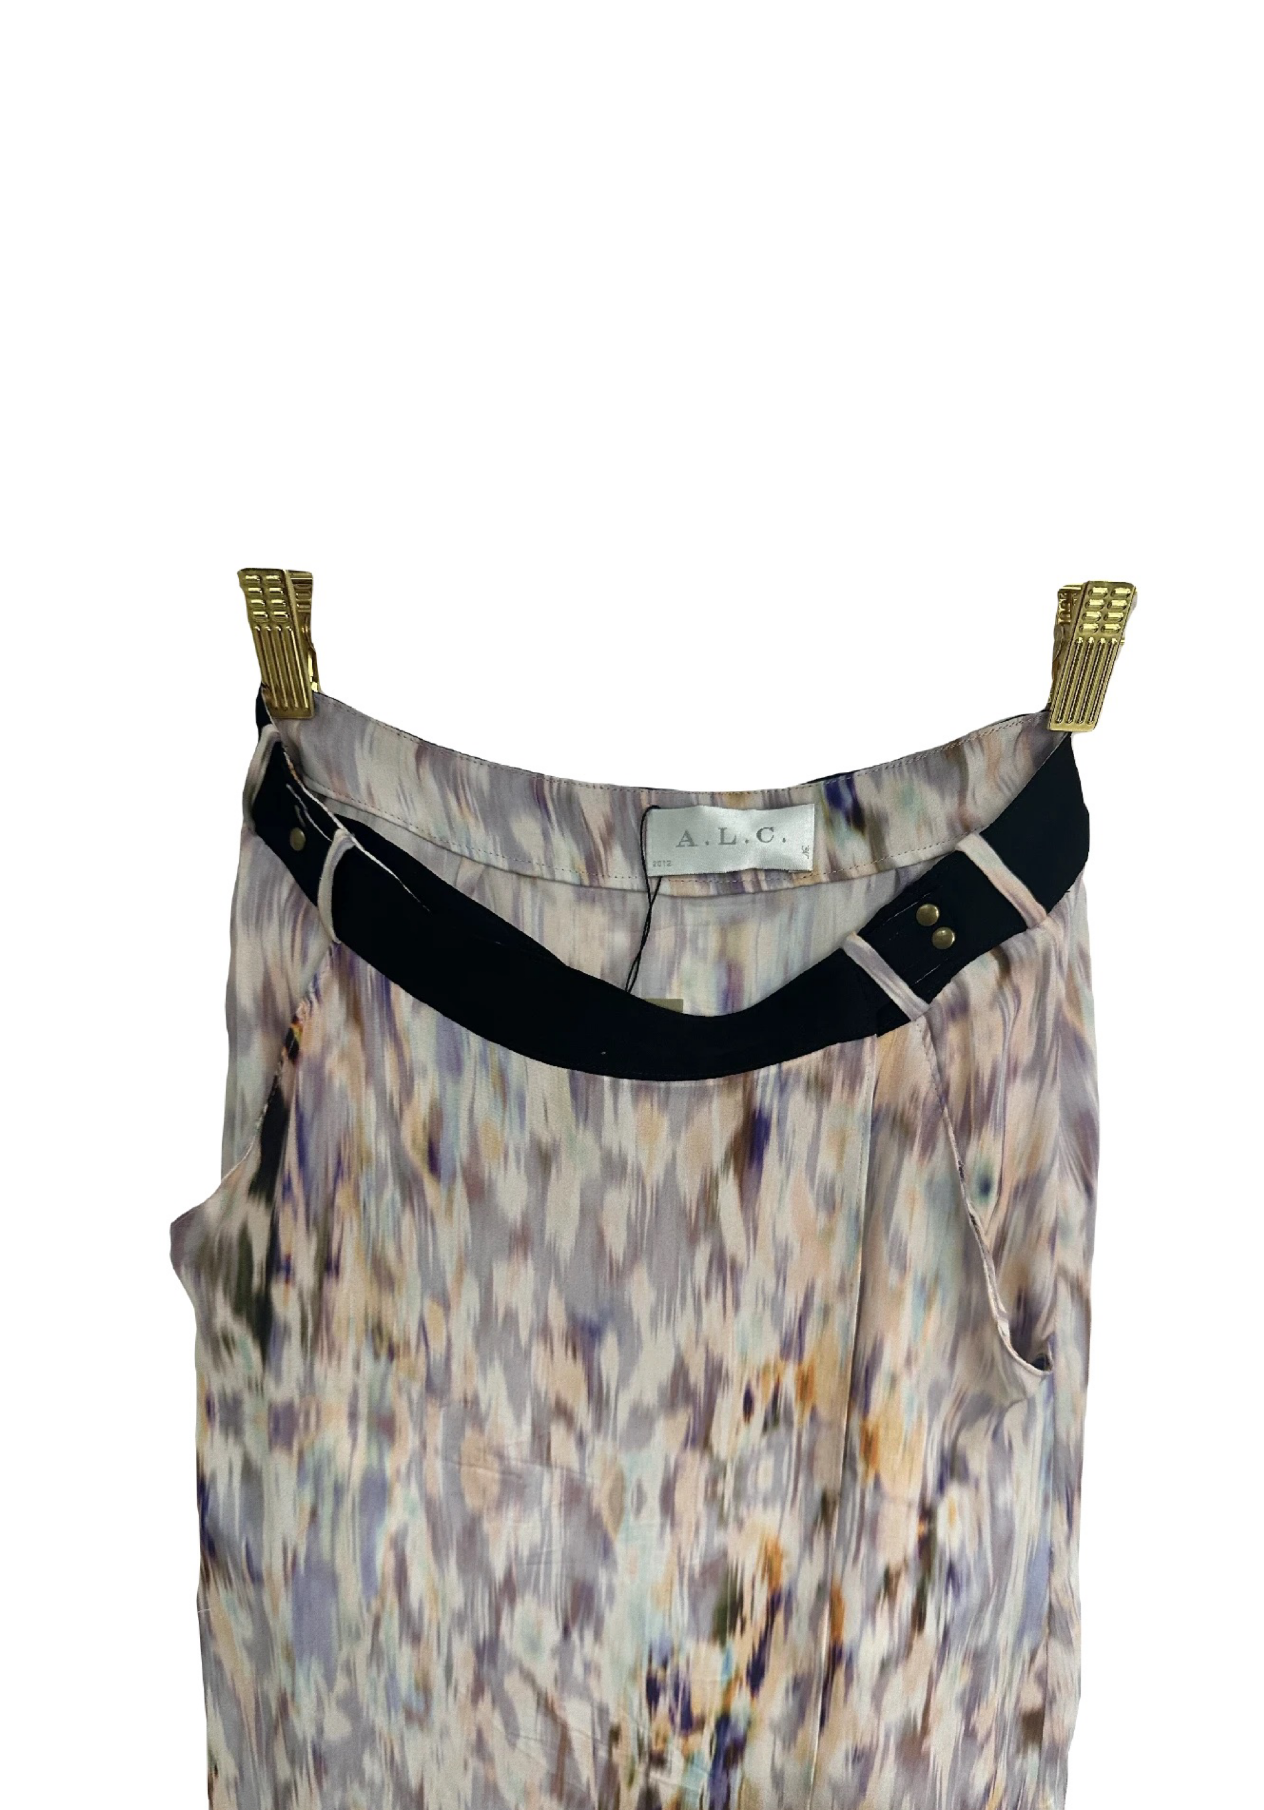 A.L.C. 2012 Collection Silk Long Maxi skirt